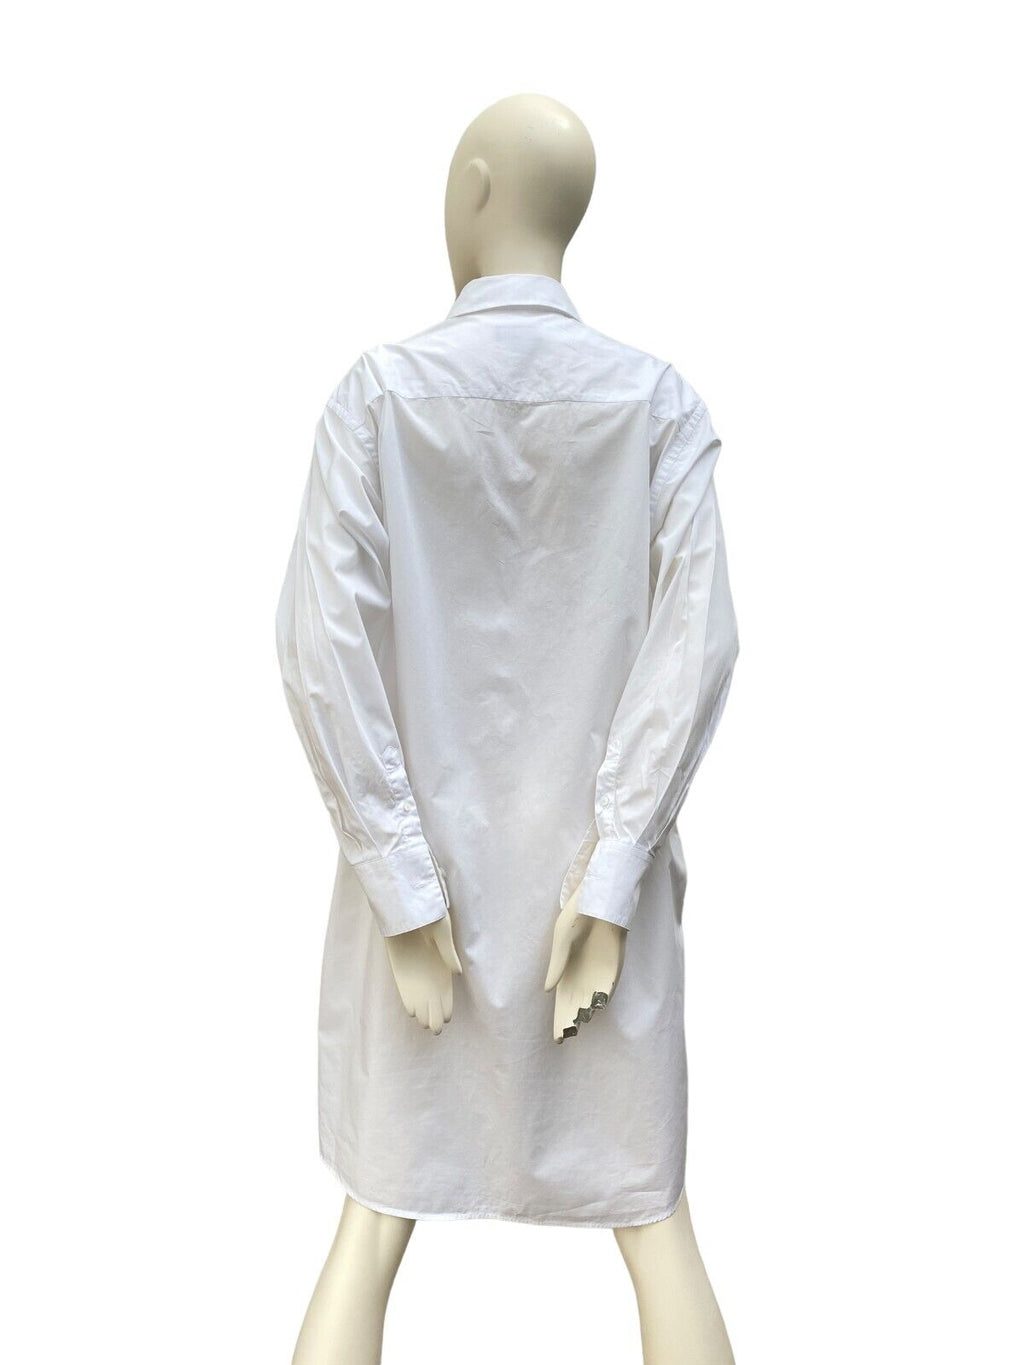 Oversized Elongated White shirt / dress